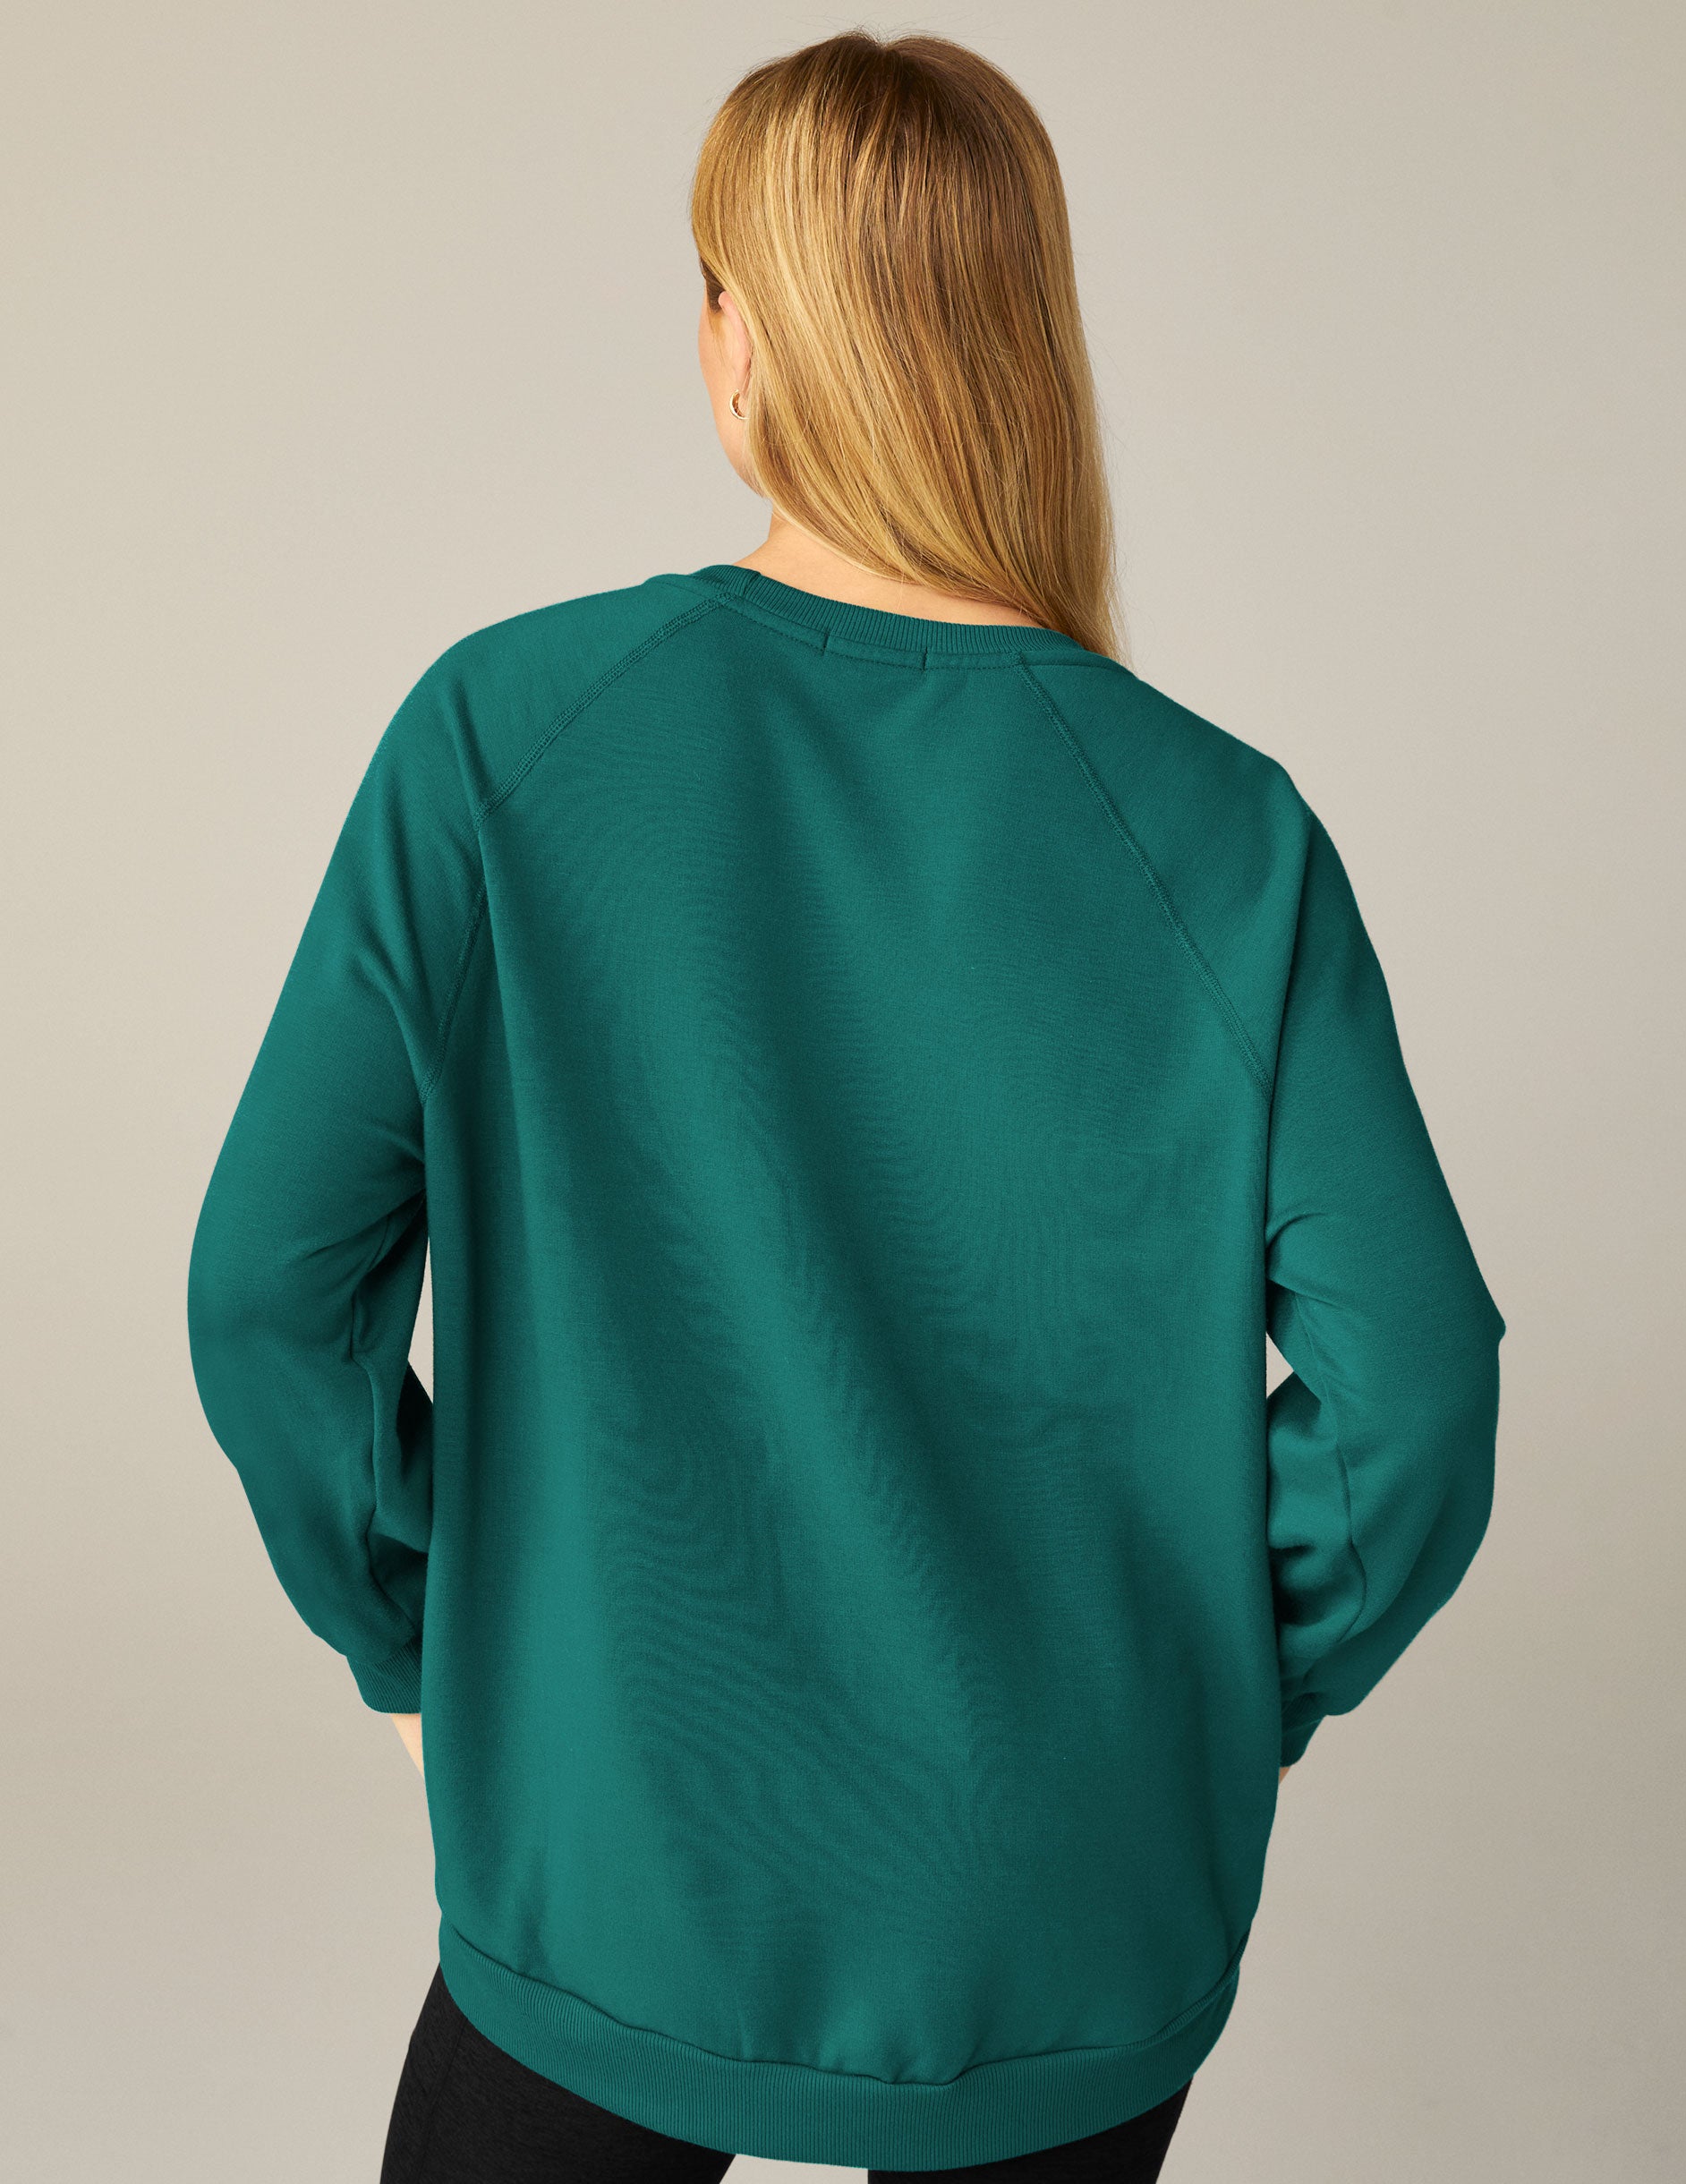 green pullover